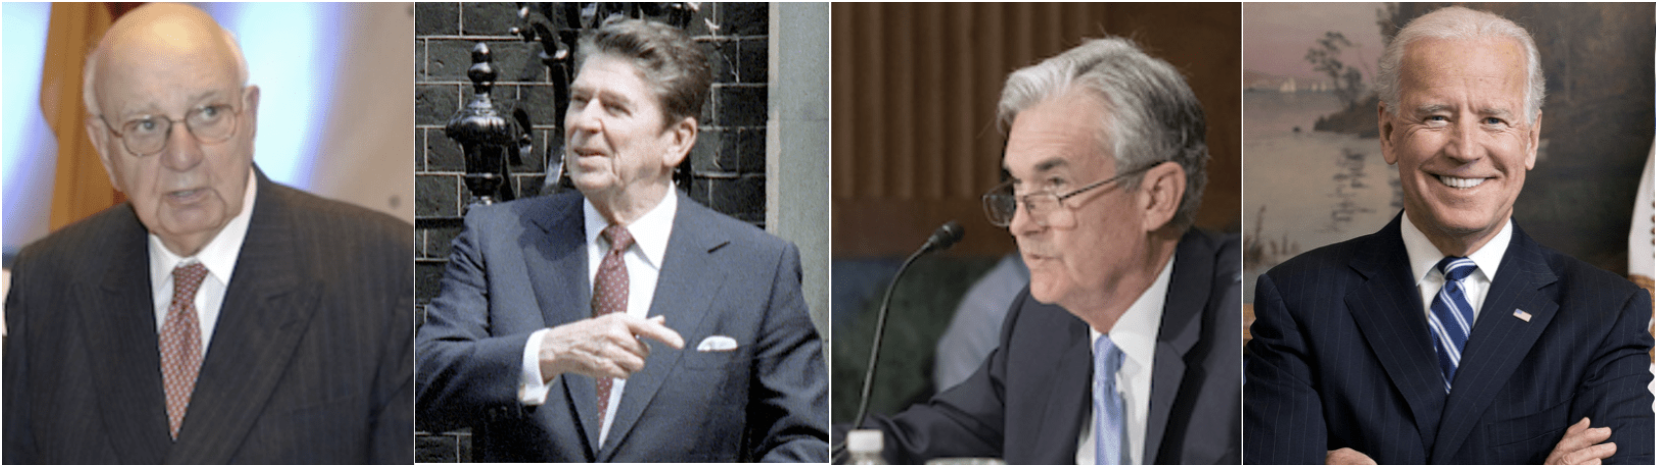 photographs of Paul Volcker, Ronald Reagan, Jerome Powell and Joe Biden